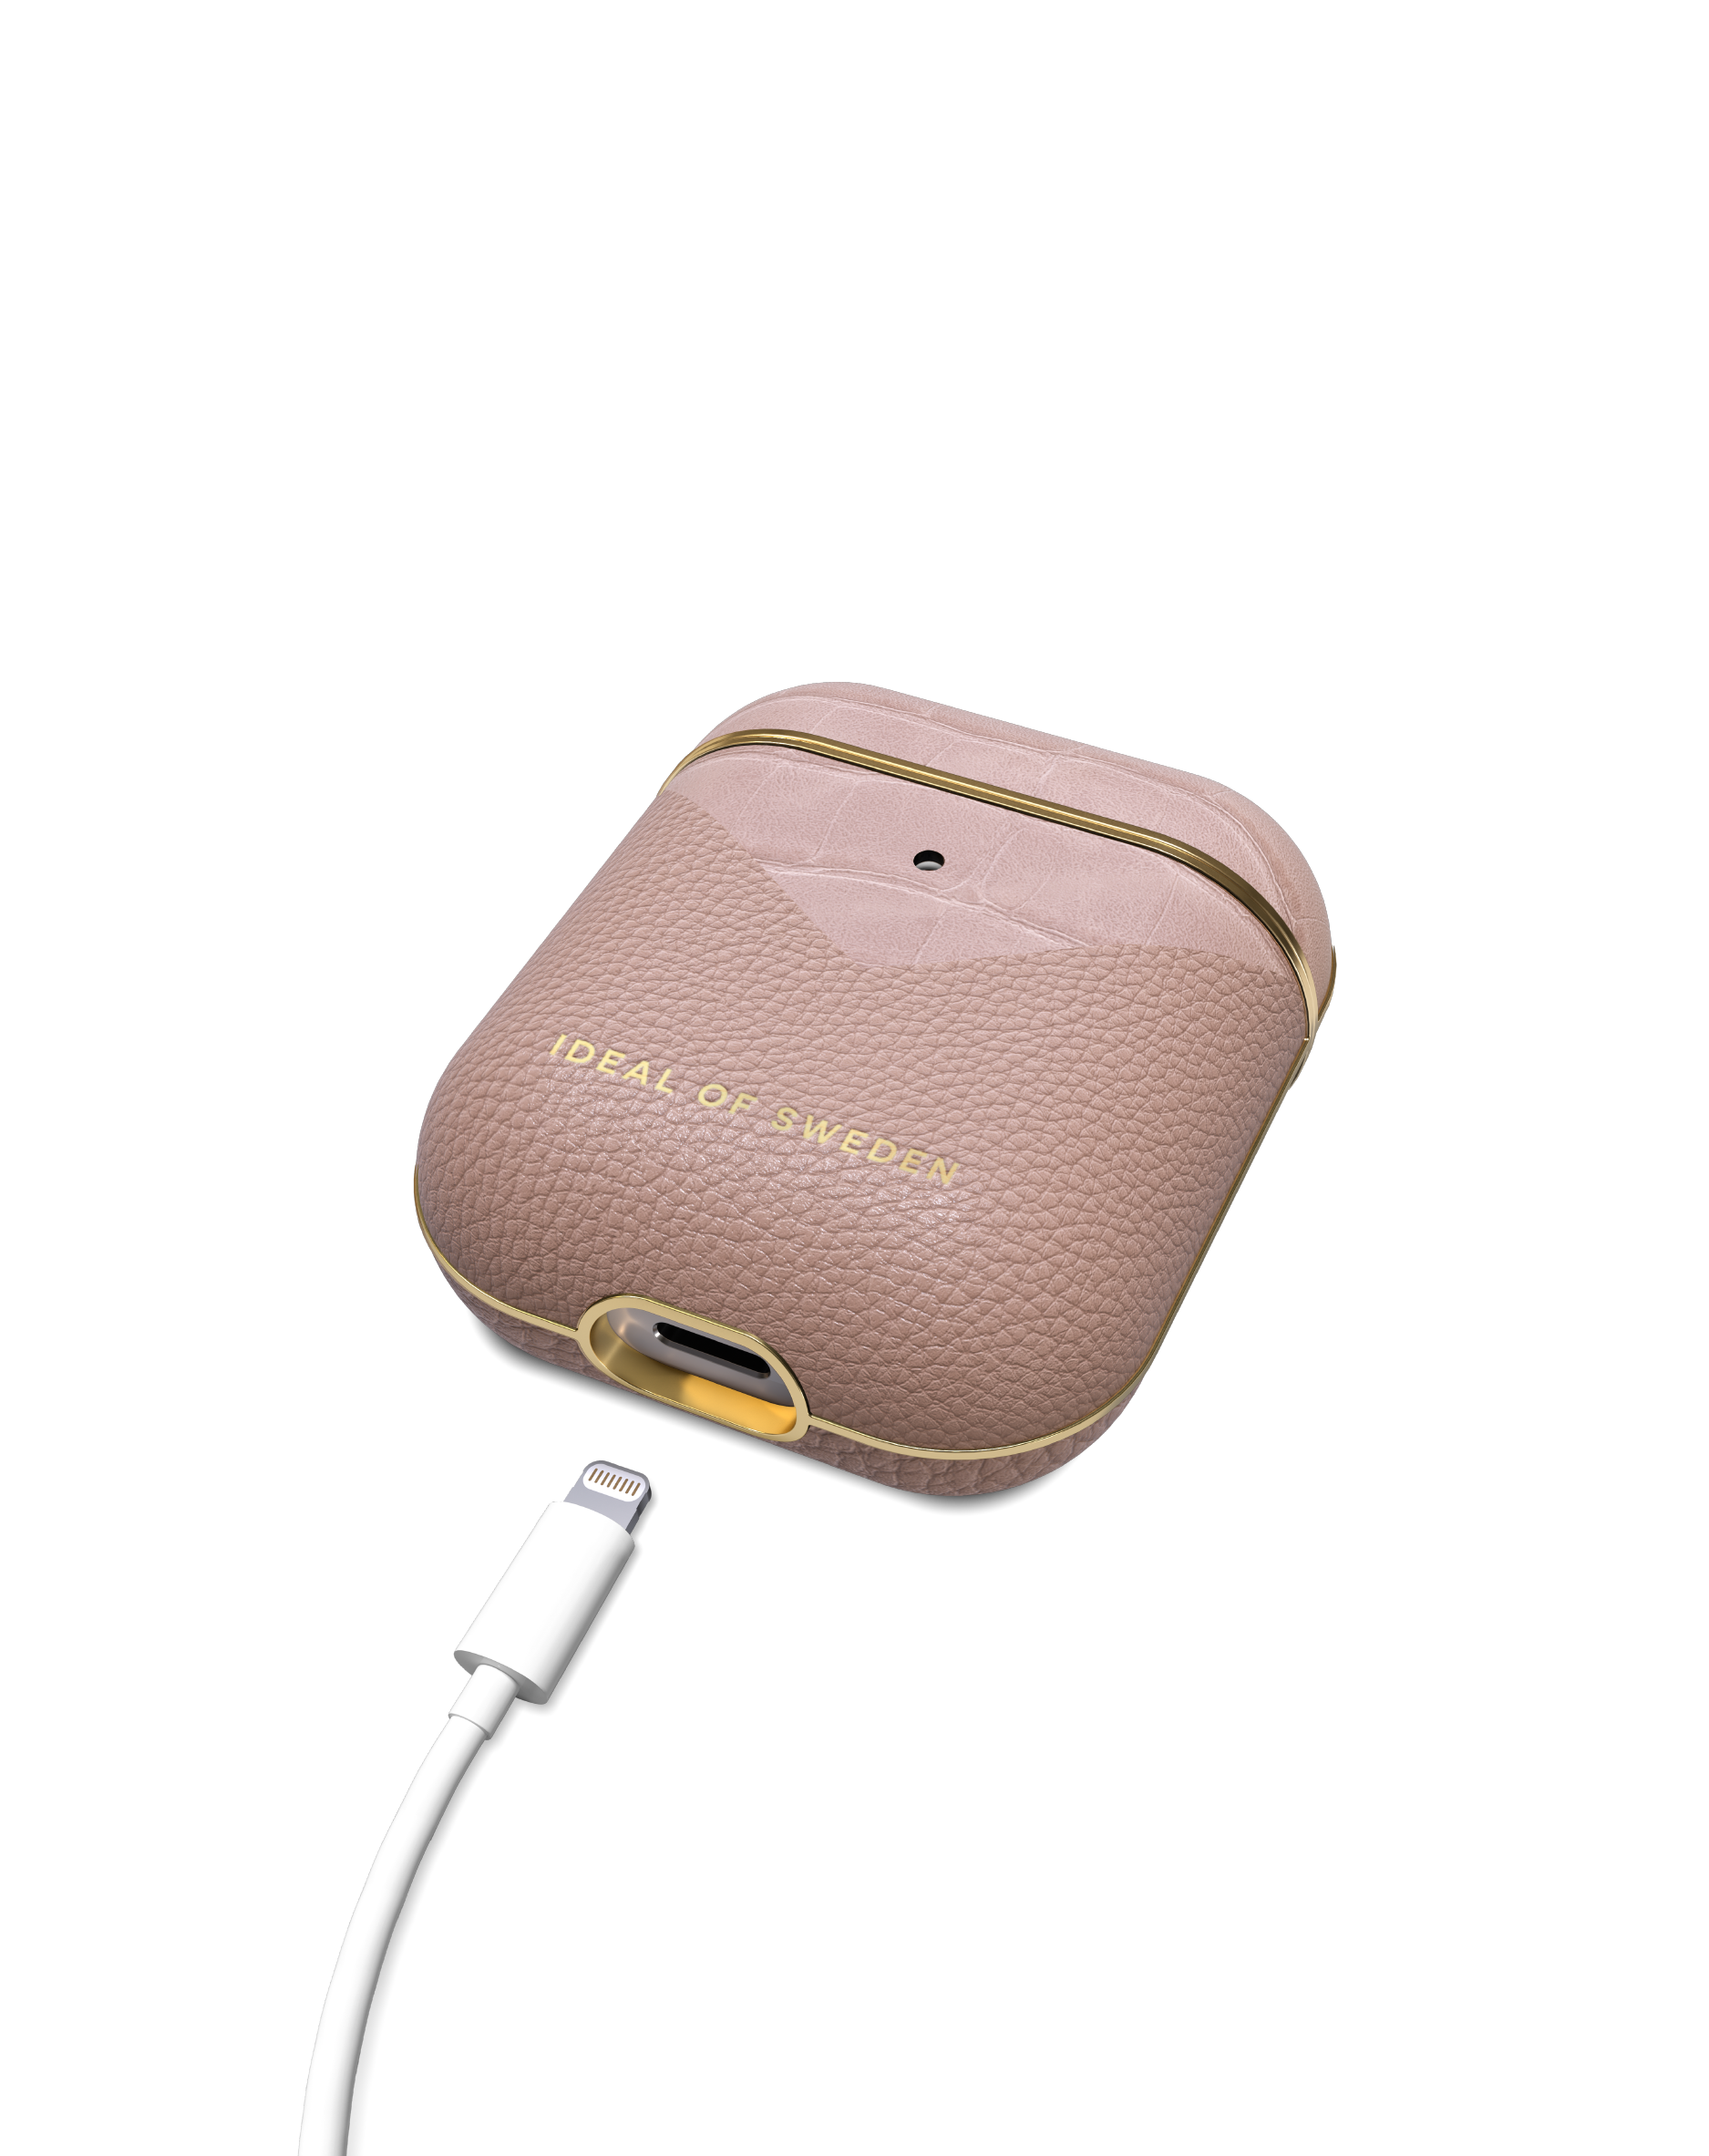 IDEAL OF SWEDEN Smoke Apple passend AirPod für: Rose IDFAPC-202 Croco Case Full Cover